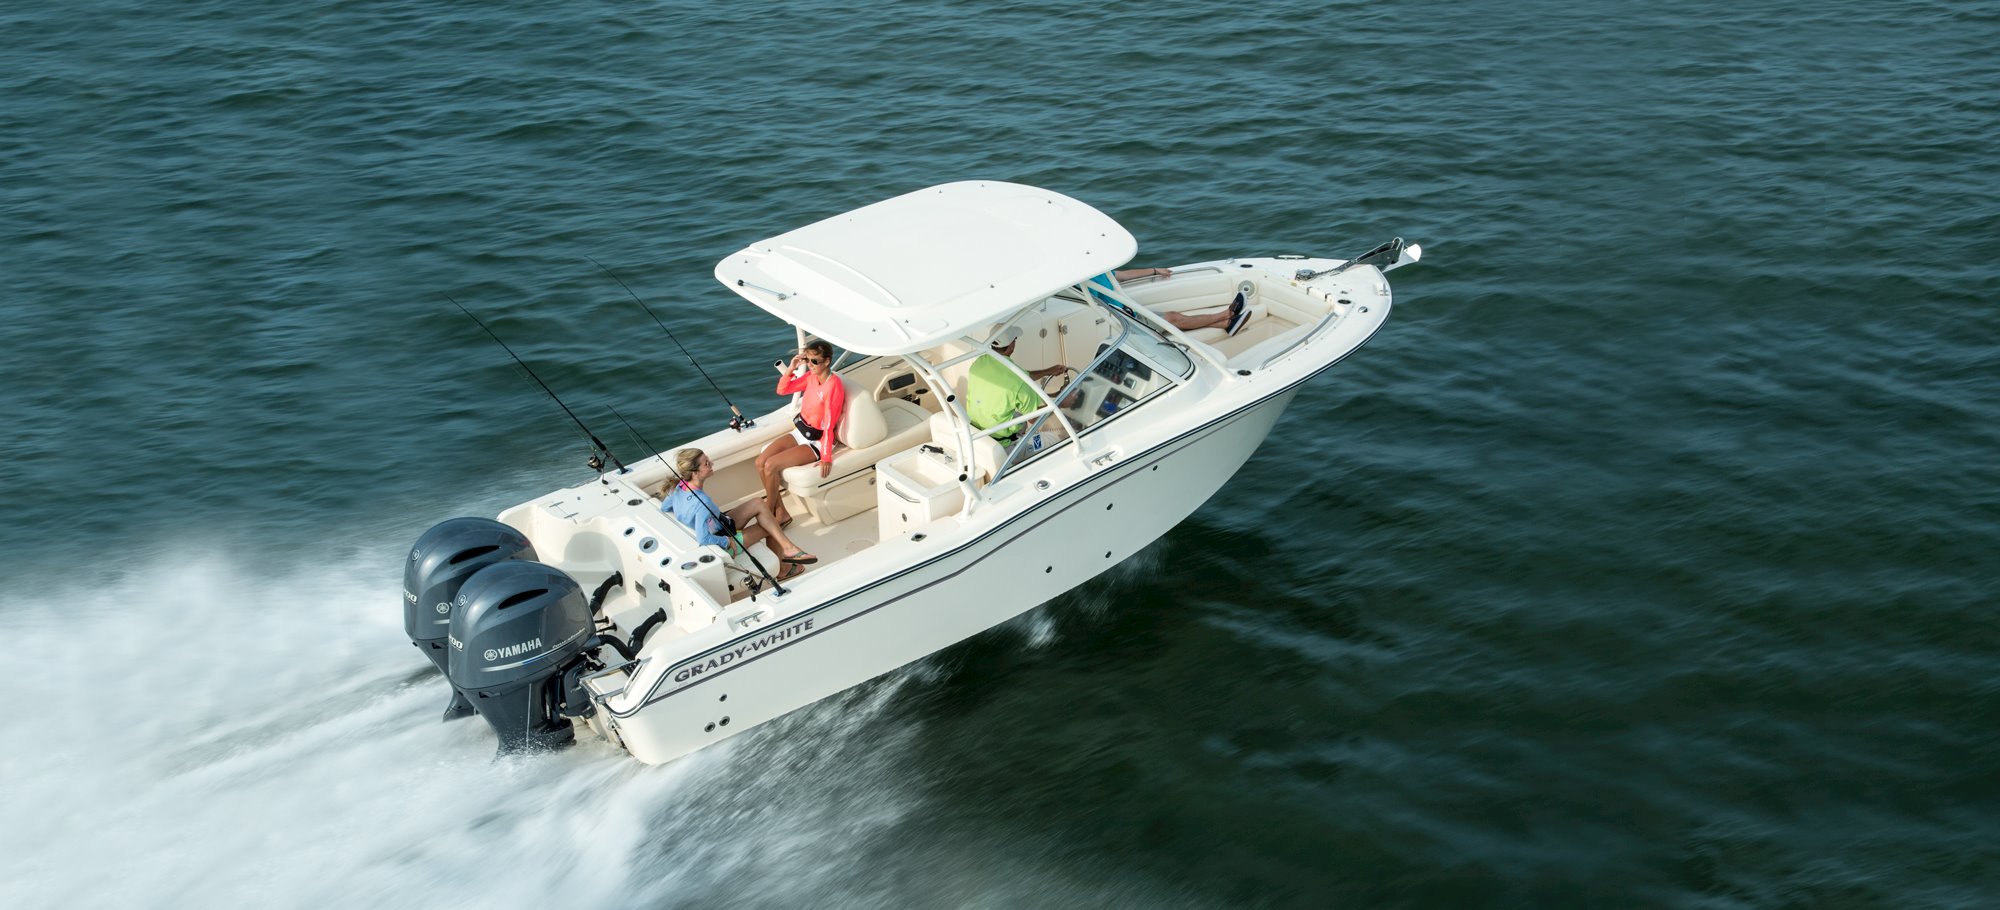 Grady-White Freedom 255 25-foot dual console boat running rear three quarter